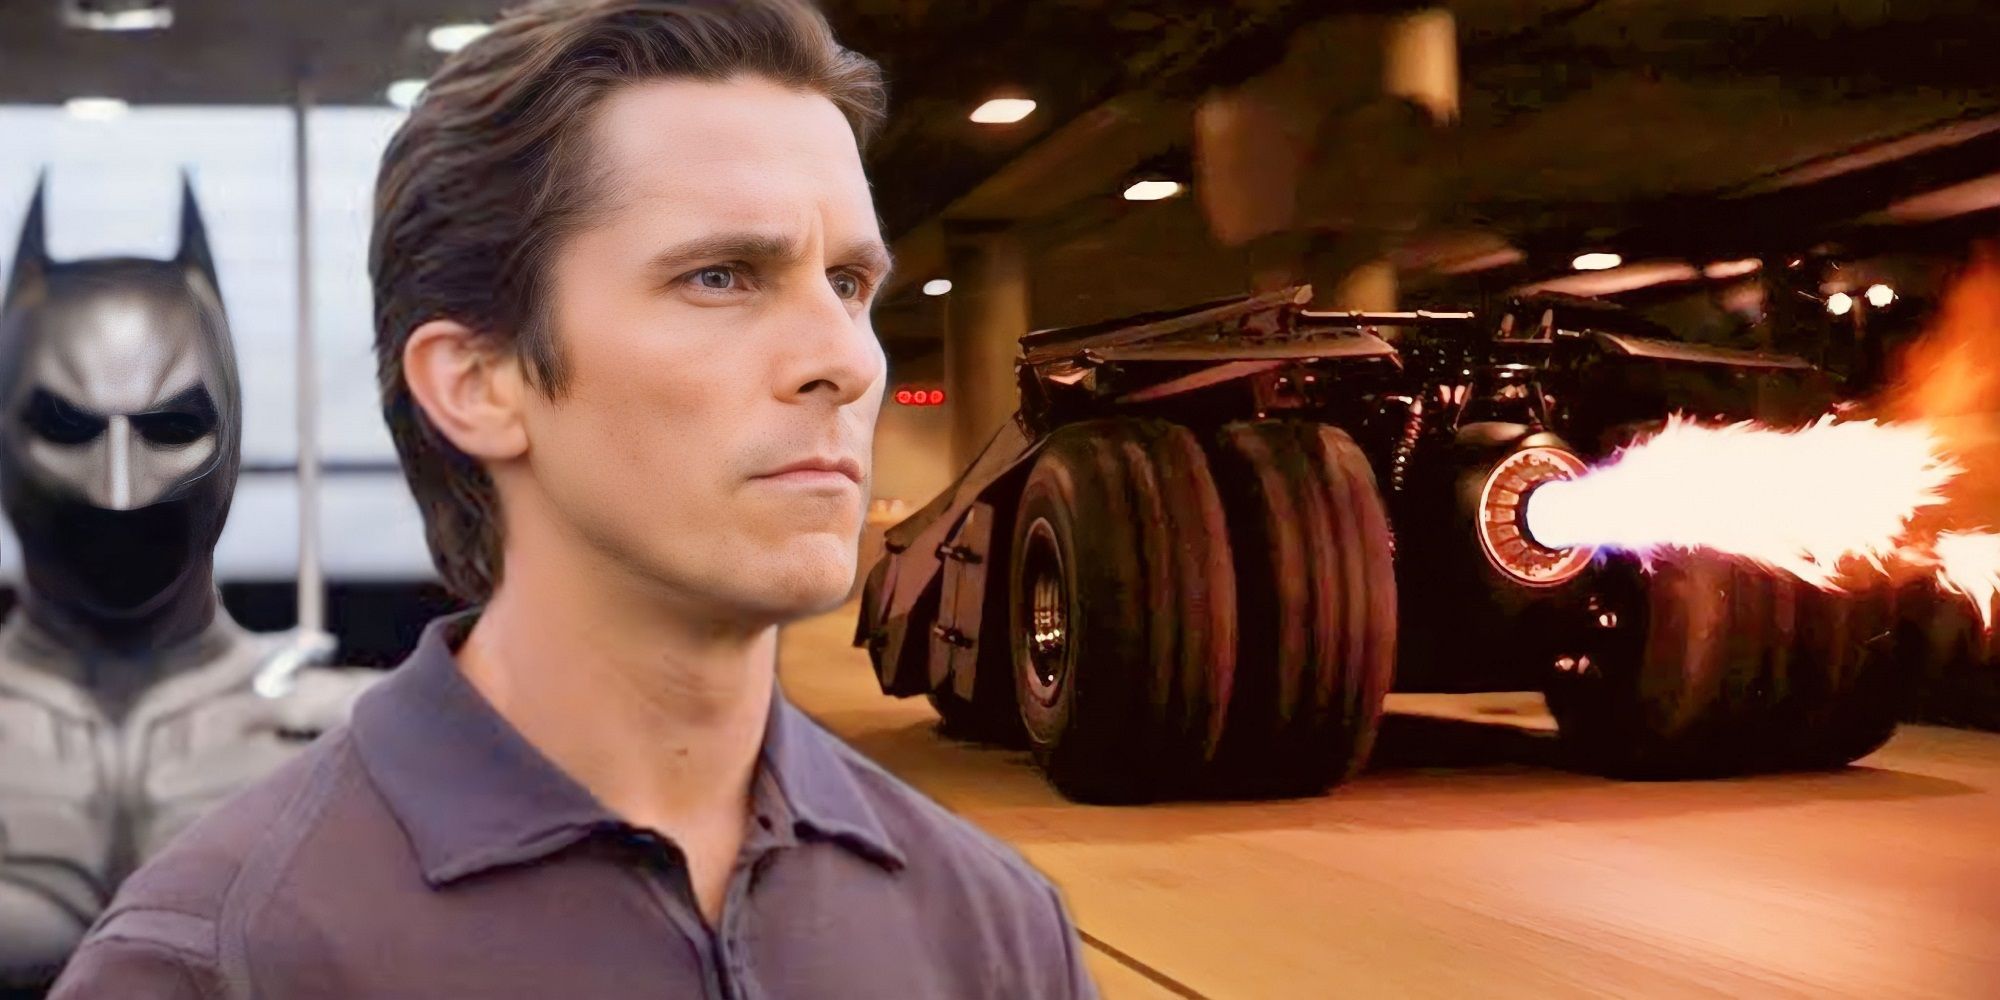 Christian Bale as Batman in Christopher Nolan's The Dark Knight with Tumbler Batmobile